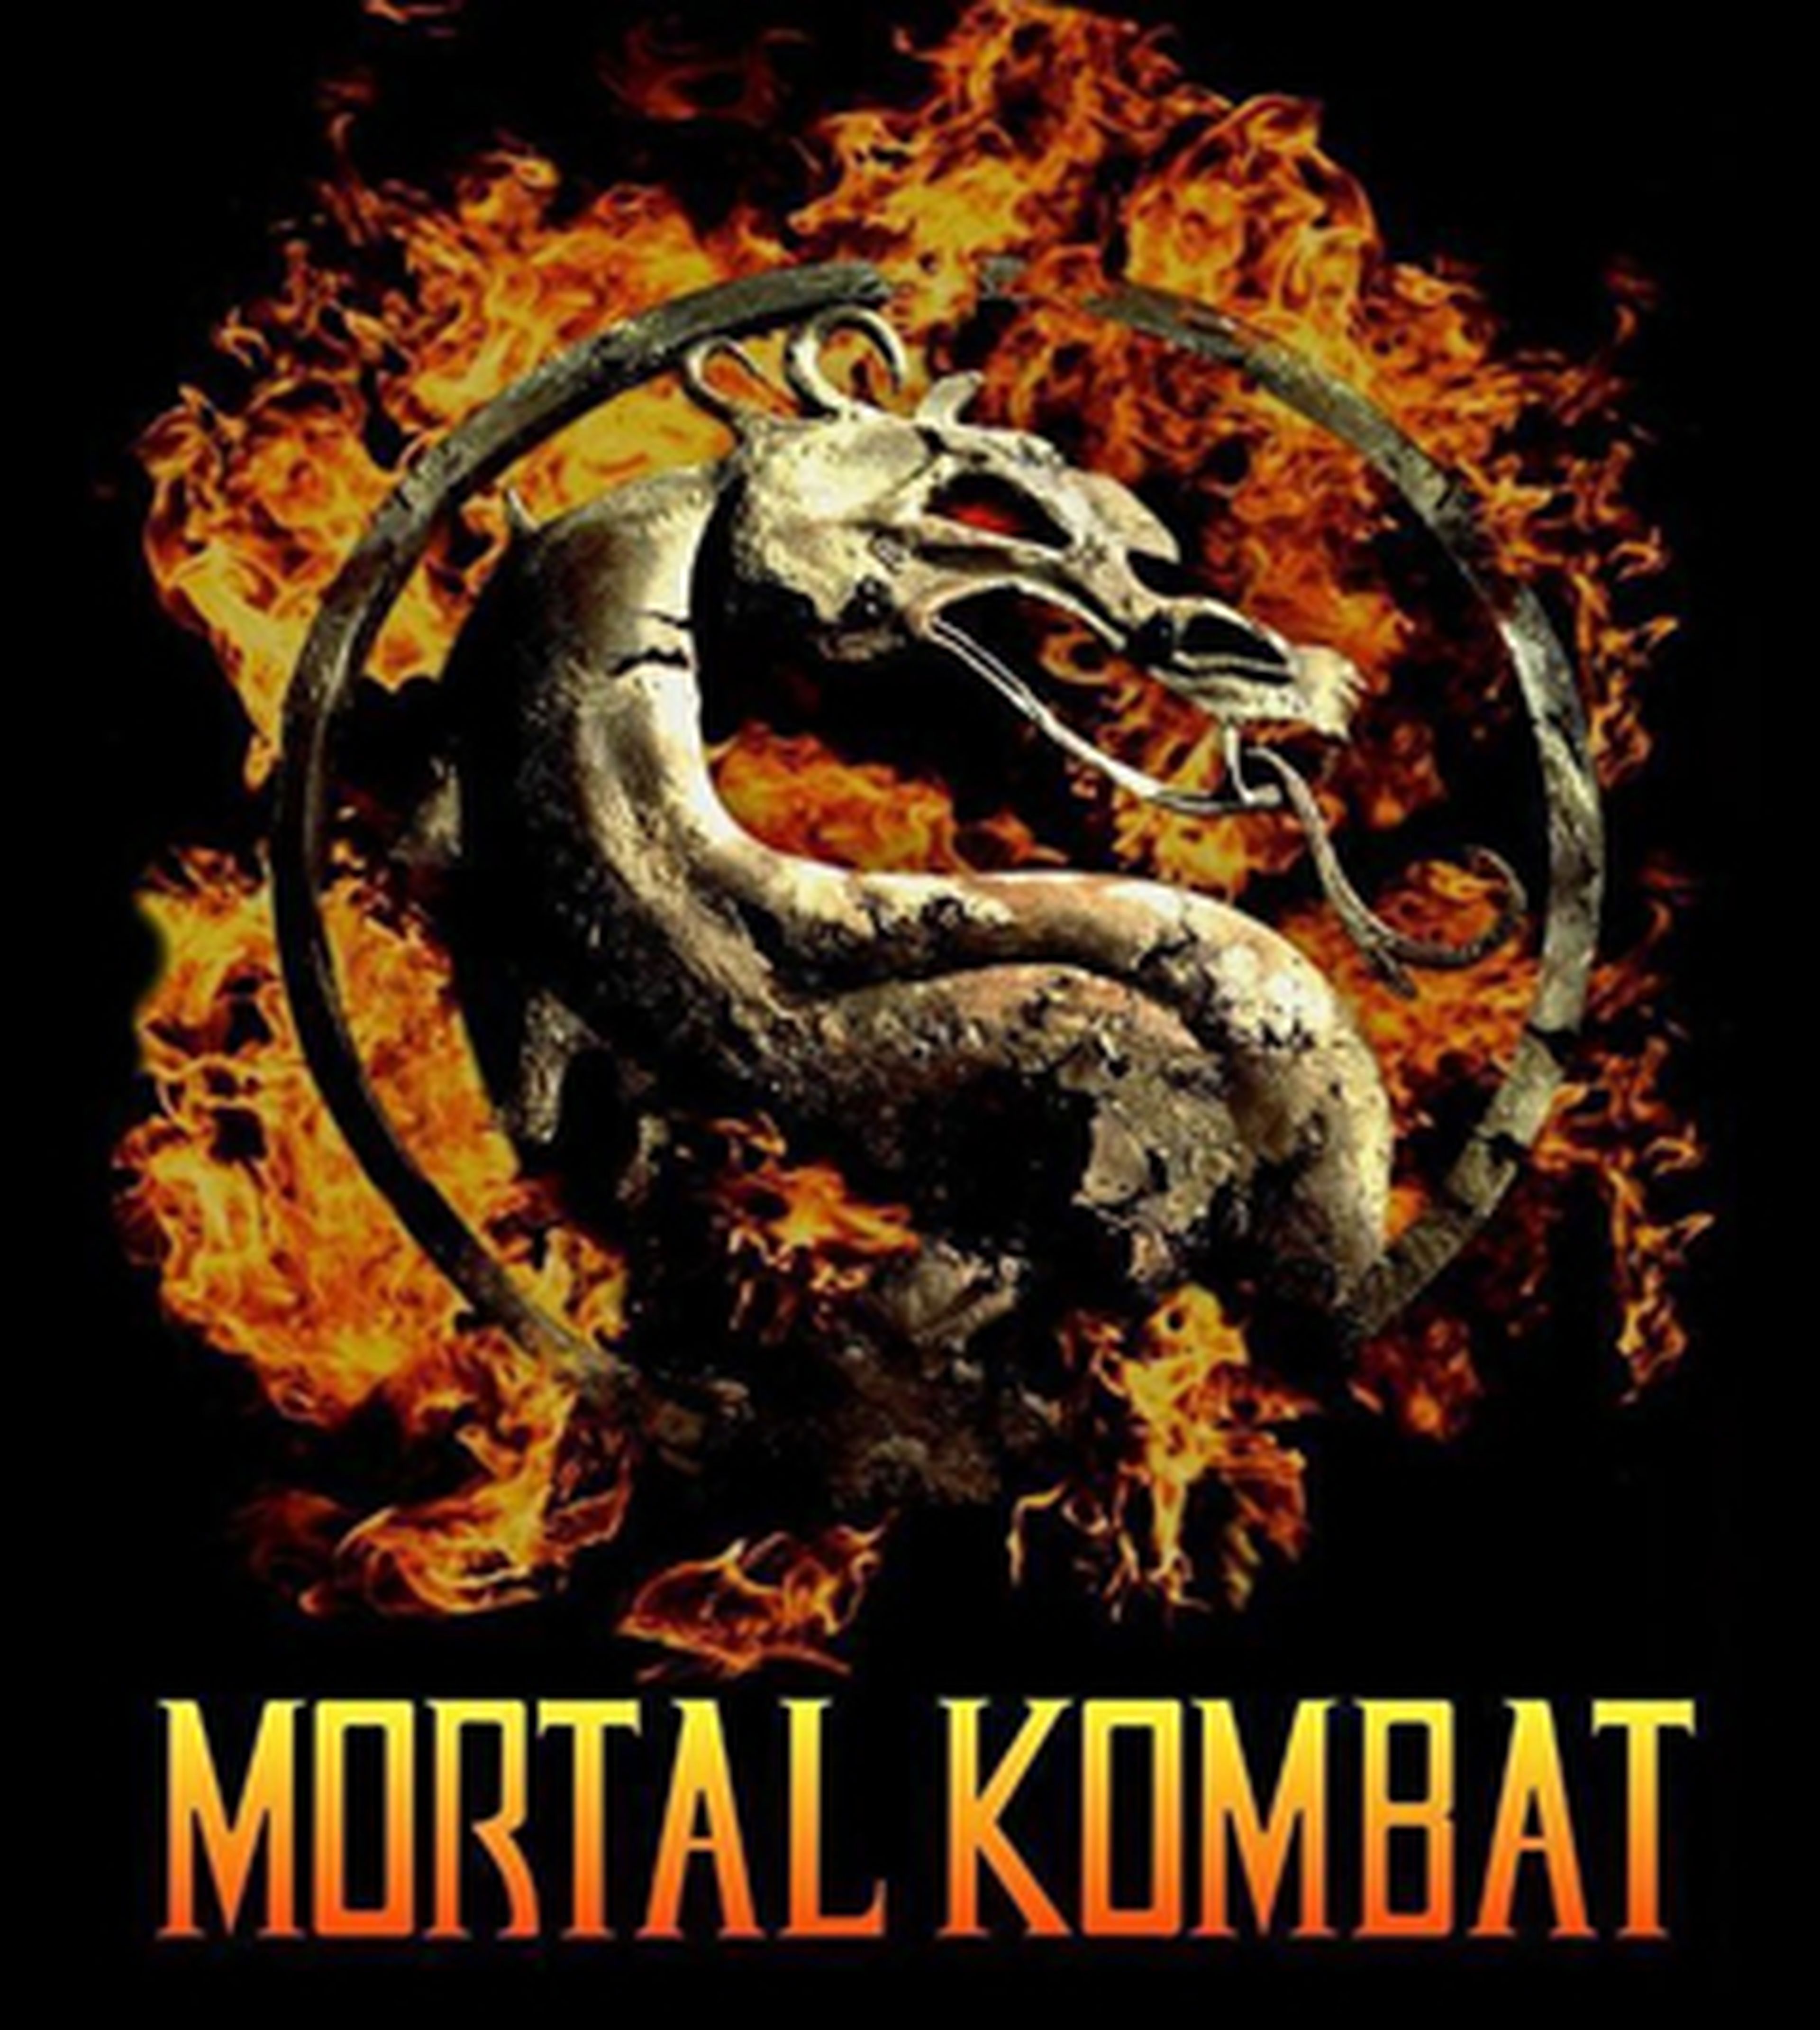 Mortal Kombat se queda sin director: Tancharoen abandona